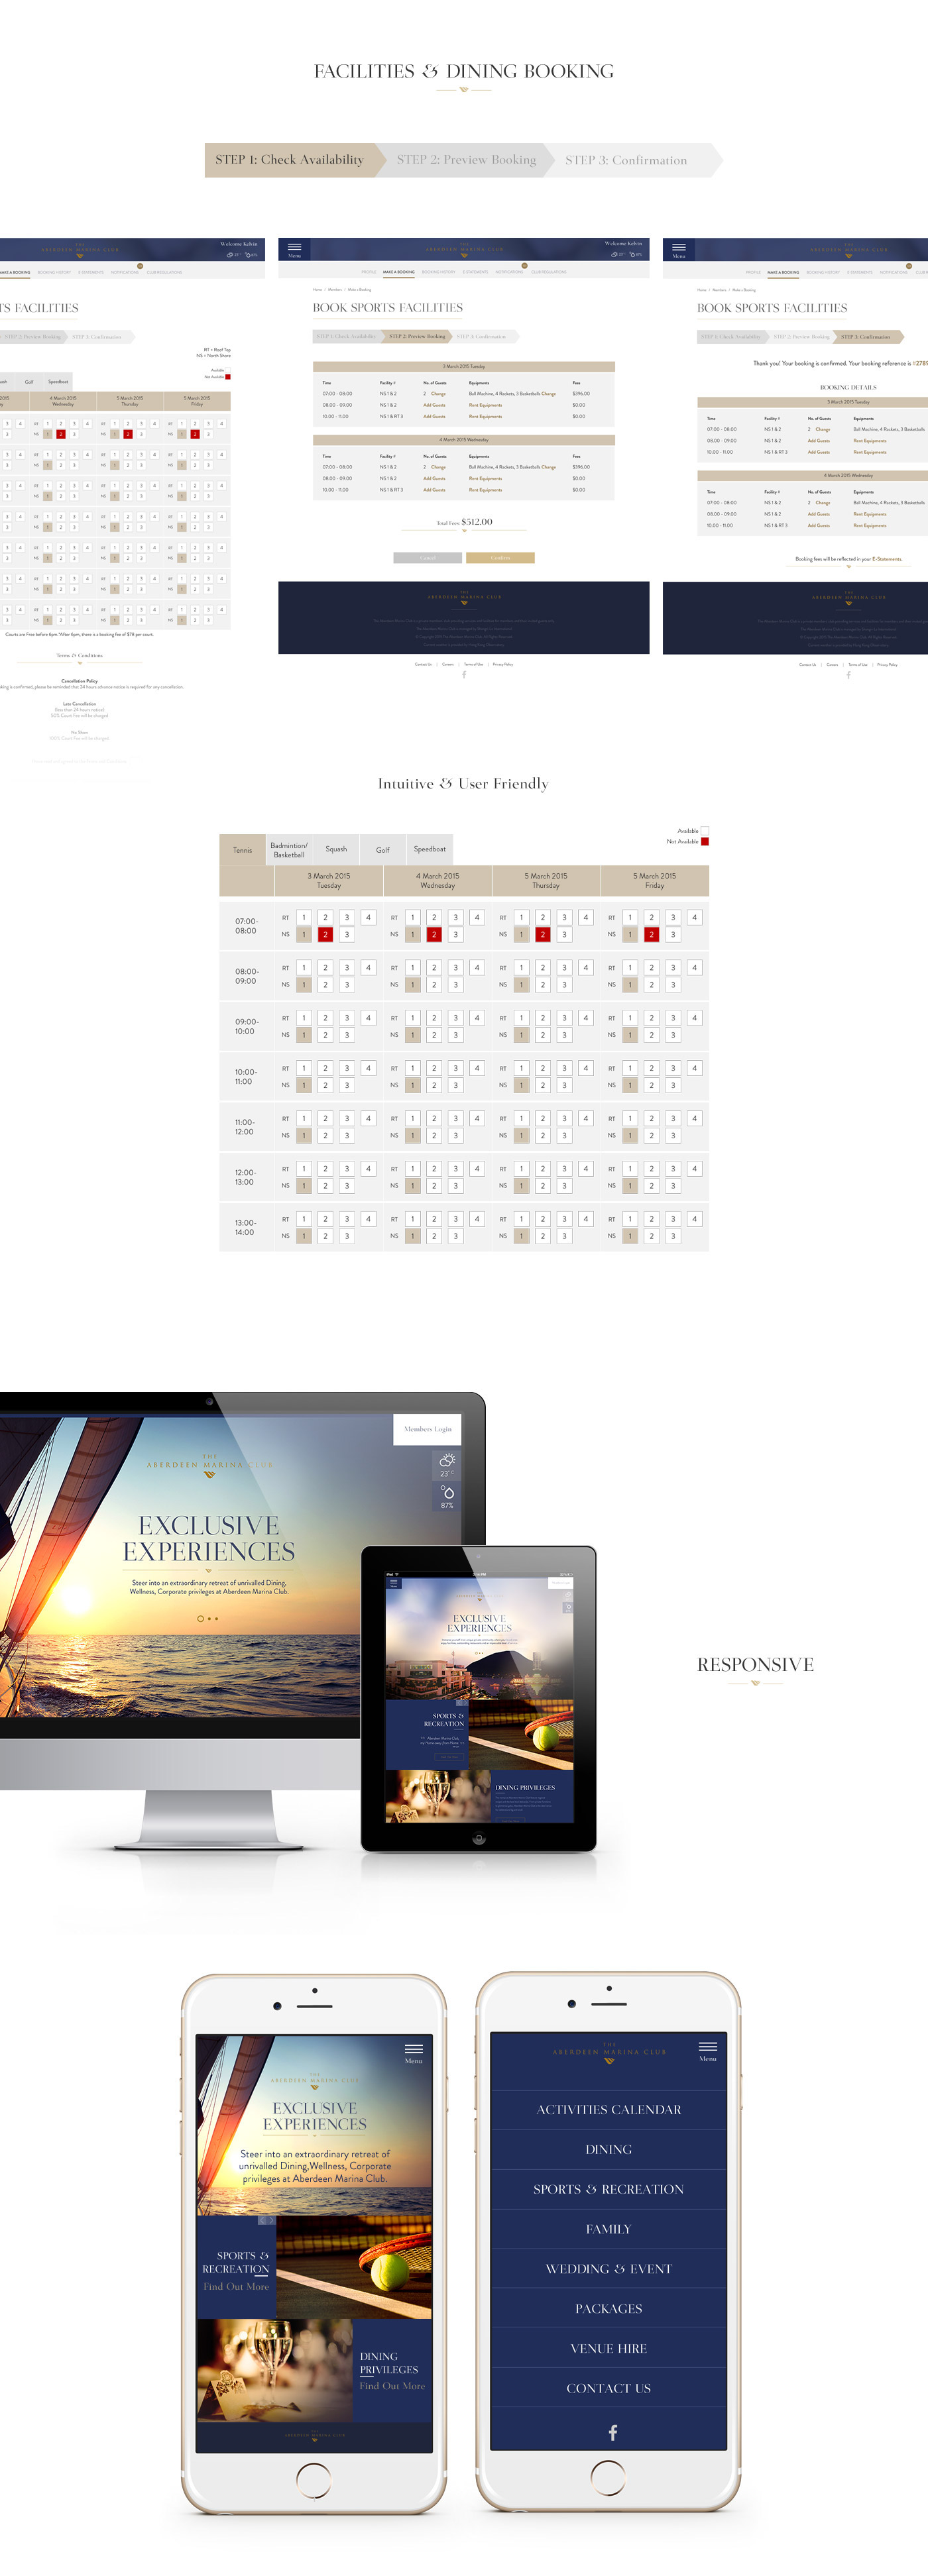 responsive website Website Design marina club elegant discovery adventure Booking System user experience Modern Web Design